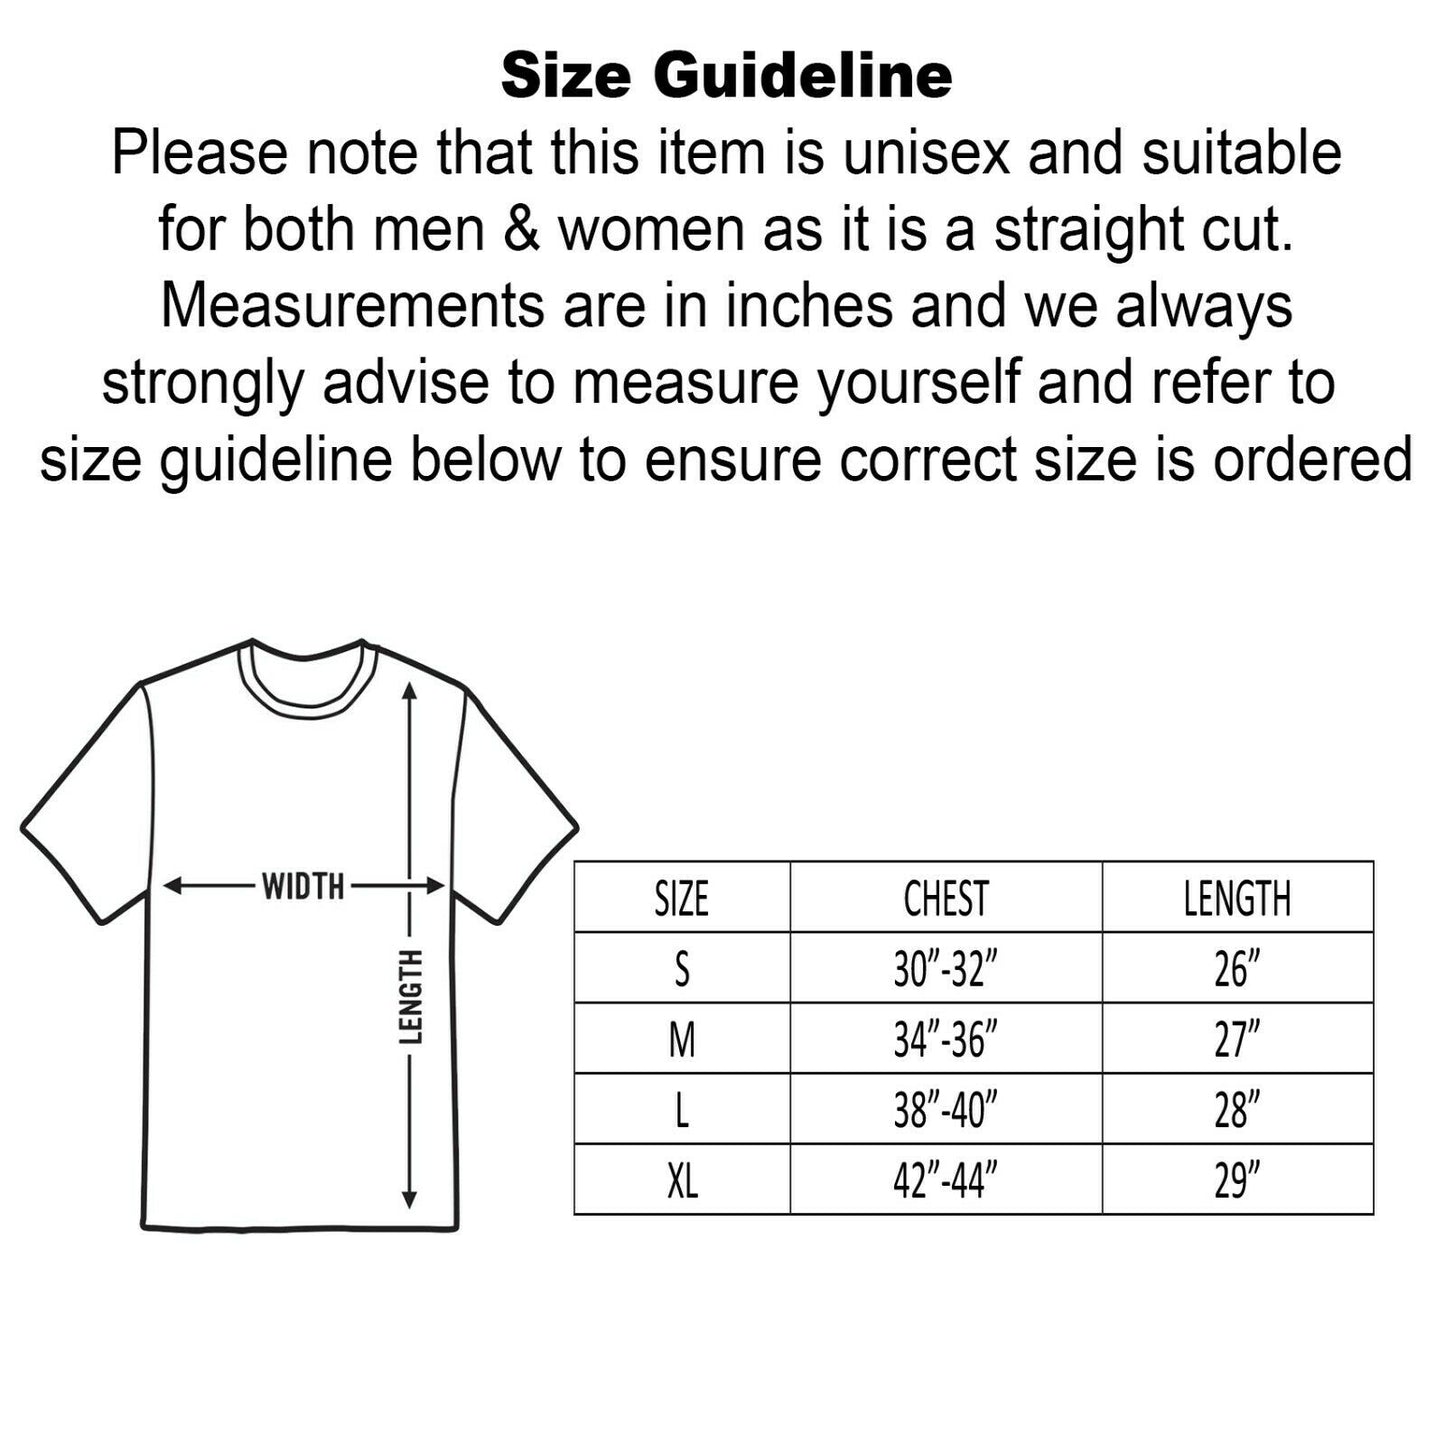 Unisex Bring Me The Horizon Raglan 3/4 Sleeve Baseball T-Shirt